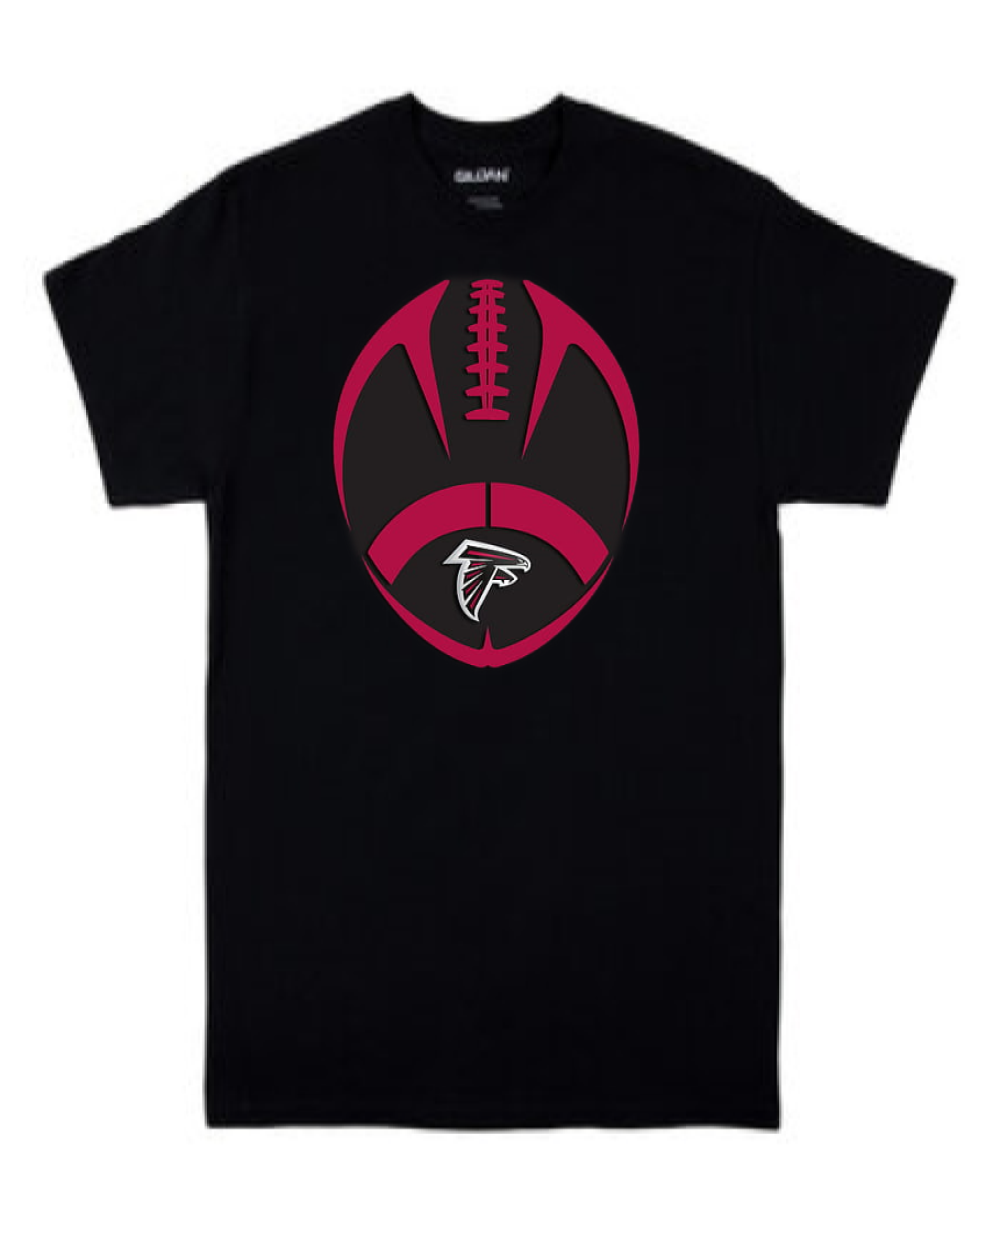 Atl. Falcons Adult & Youth T-shirts